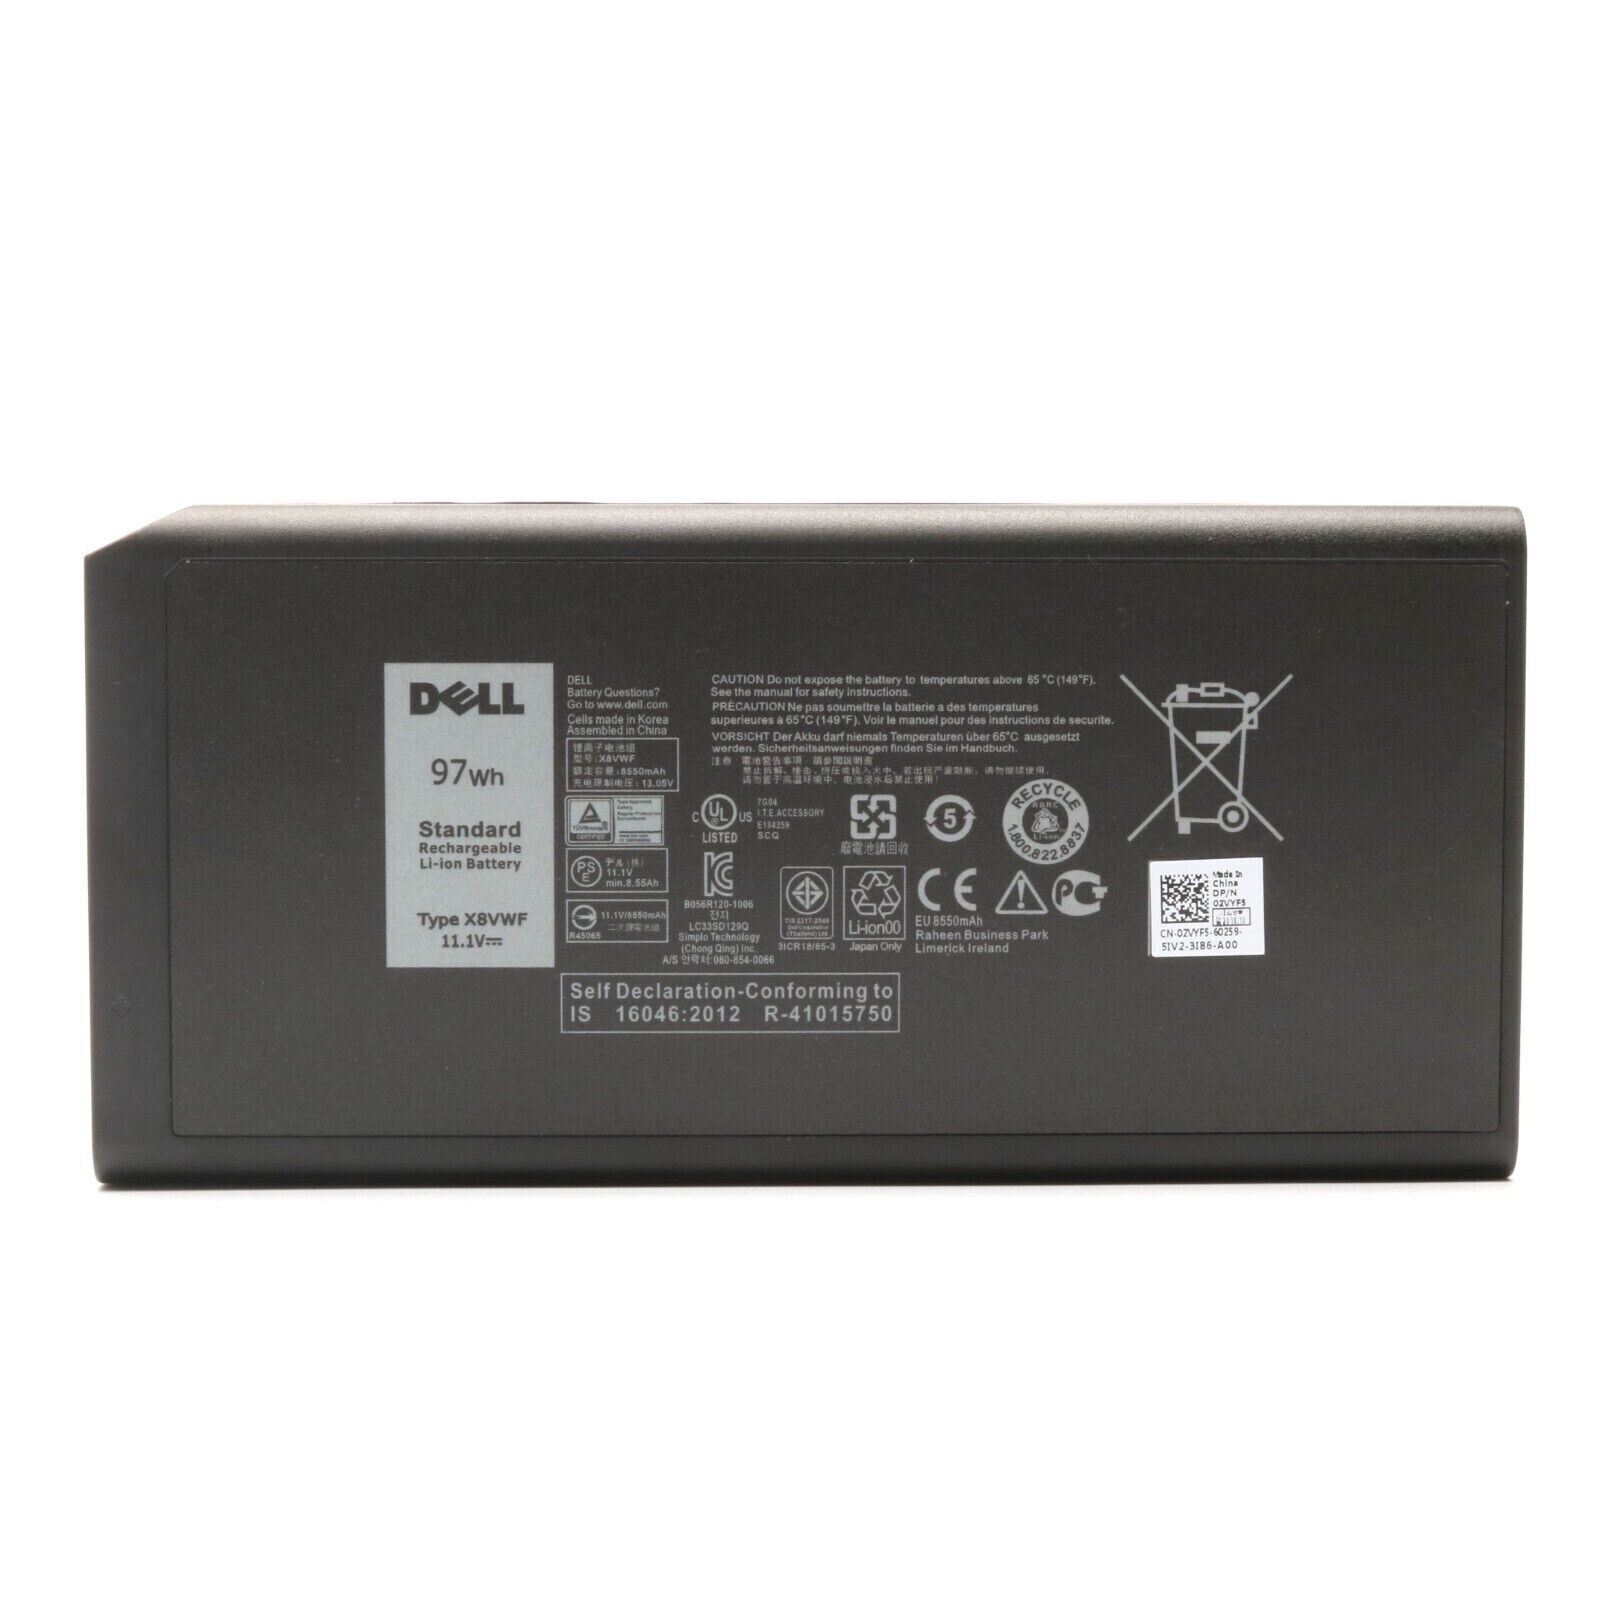 NEW Genuine X8VWF 4XKN5 Battery For Dell Latitude E5404 E7404 VCWGN 05XT3V  97WH